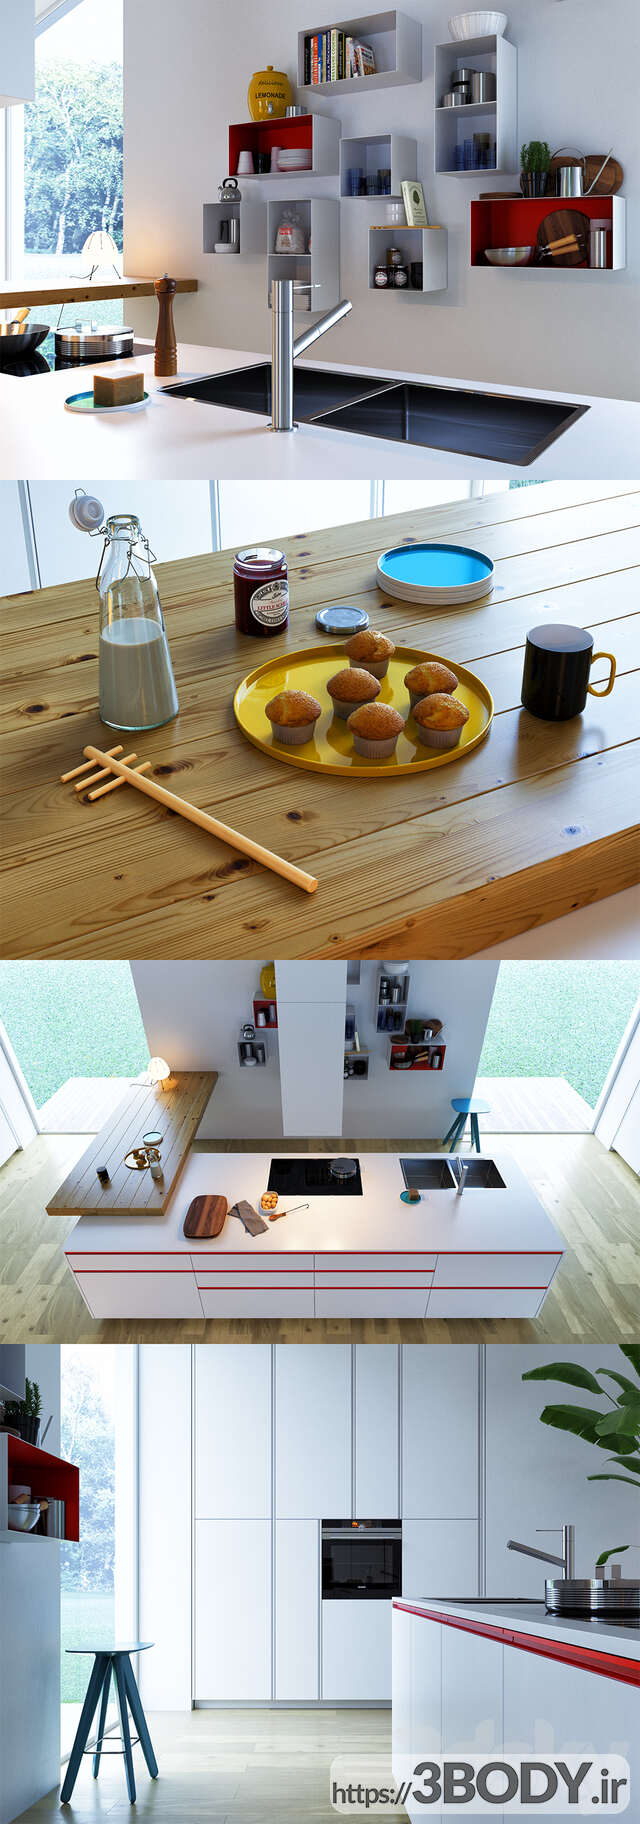 آبجکت سه بعدی کابینت آشپزخانه مدرن عکس 3